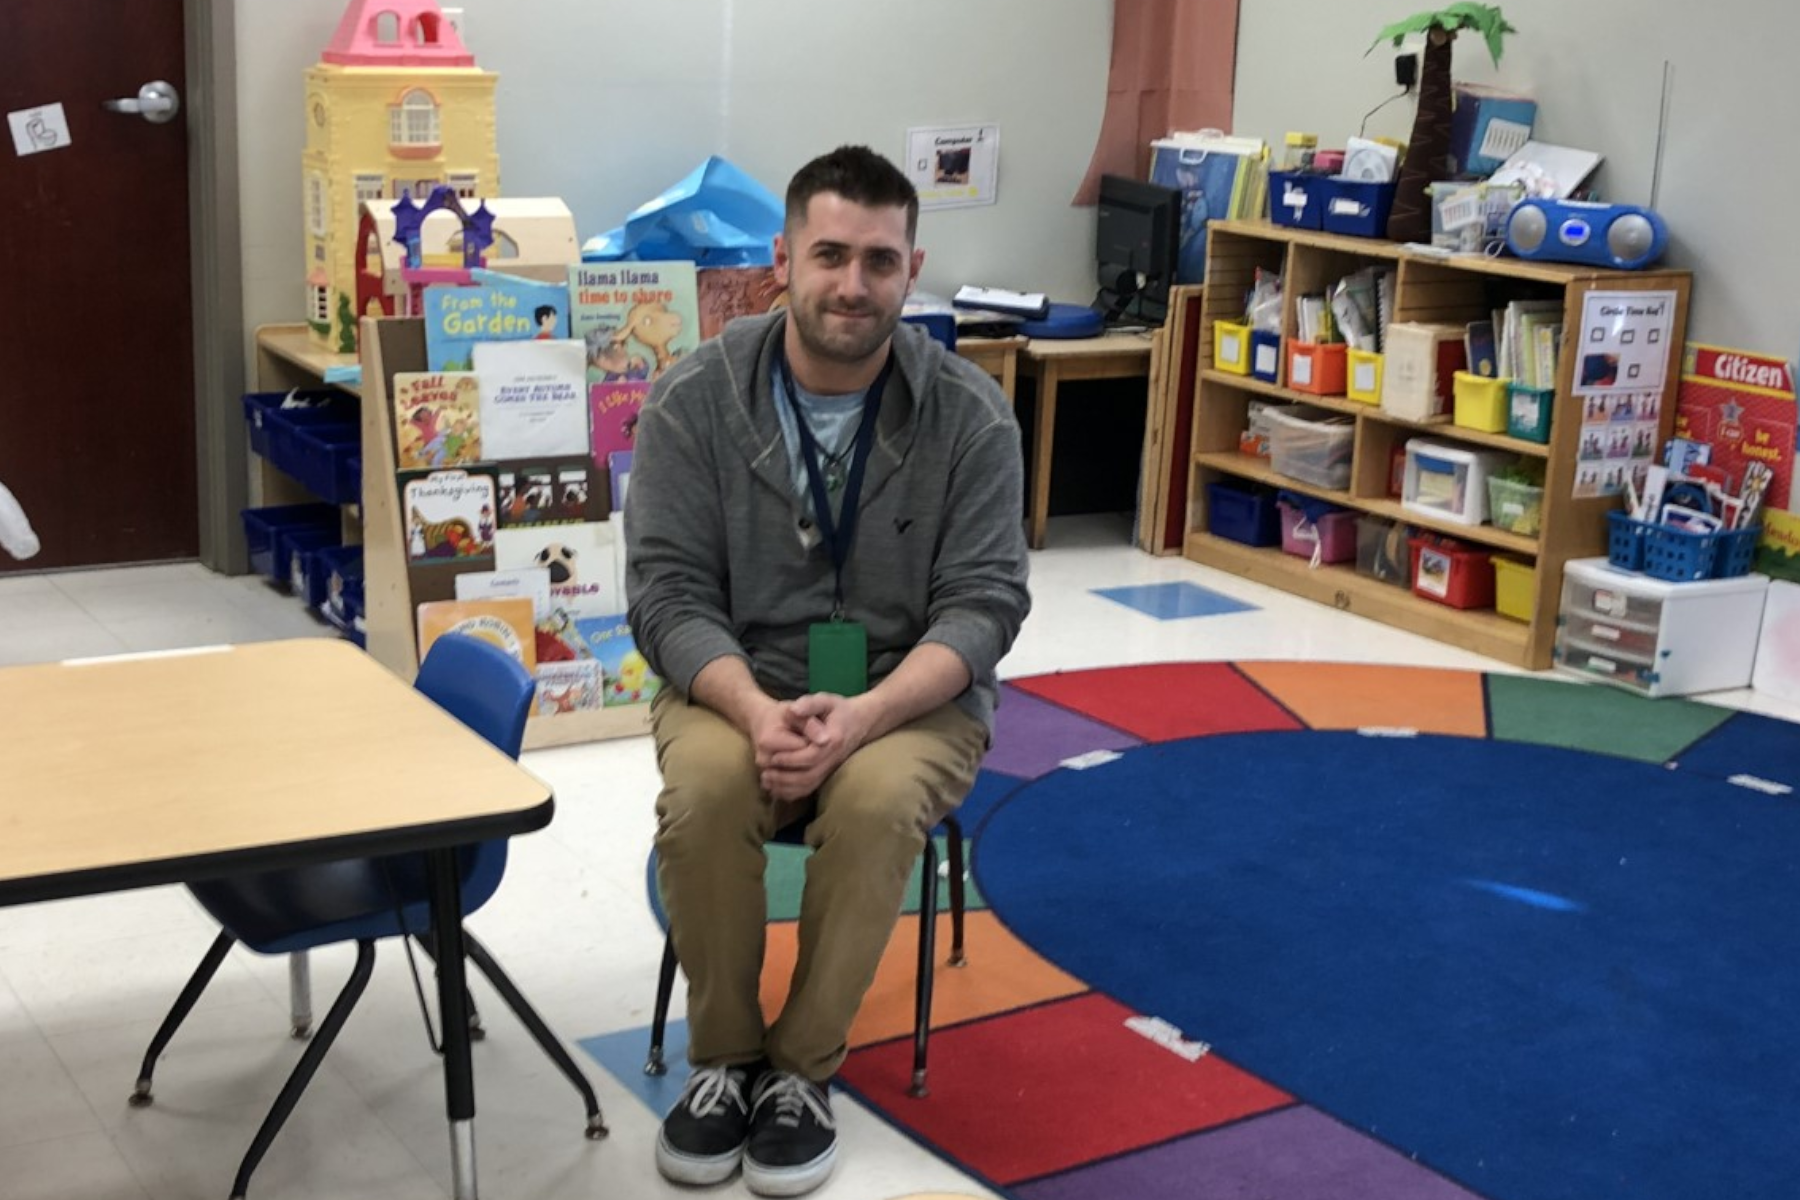 Josh Starr sitting in chair in preschool classroom.